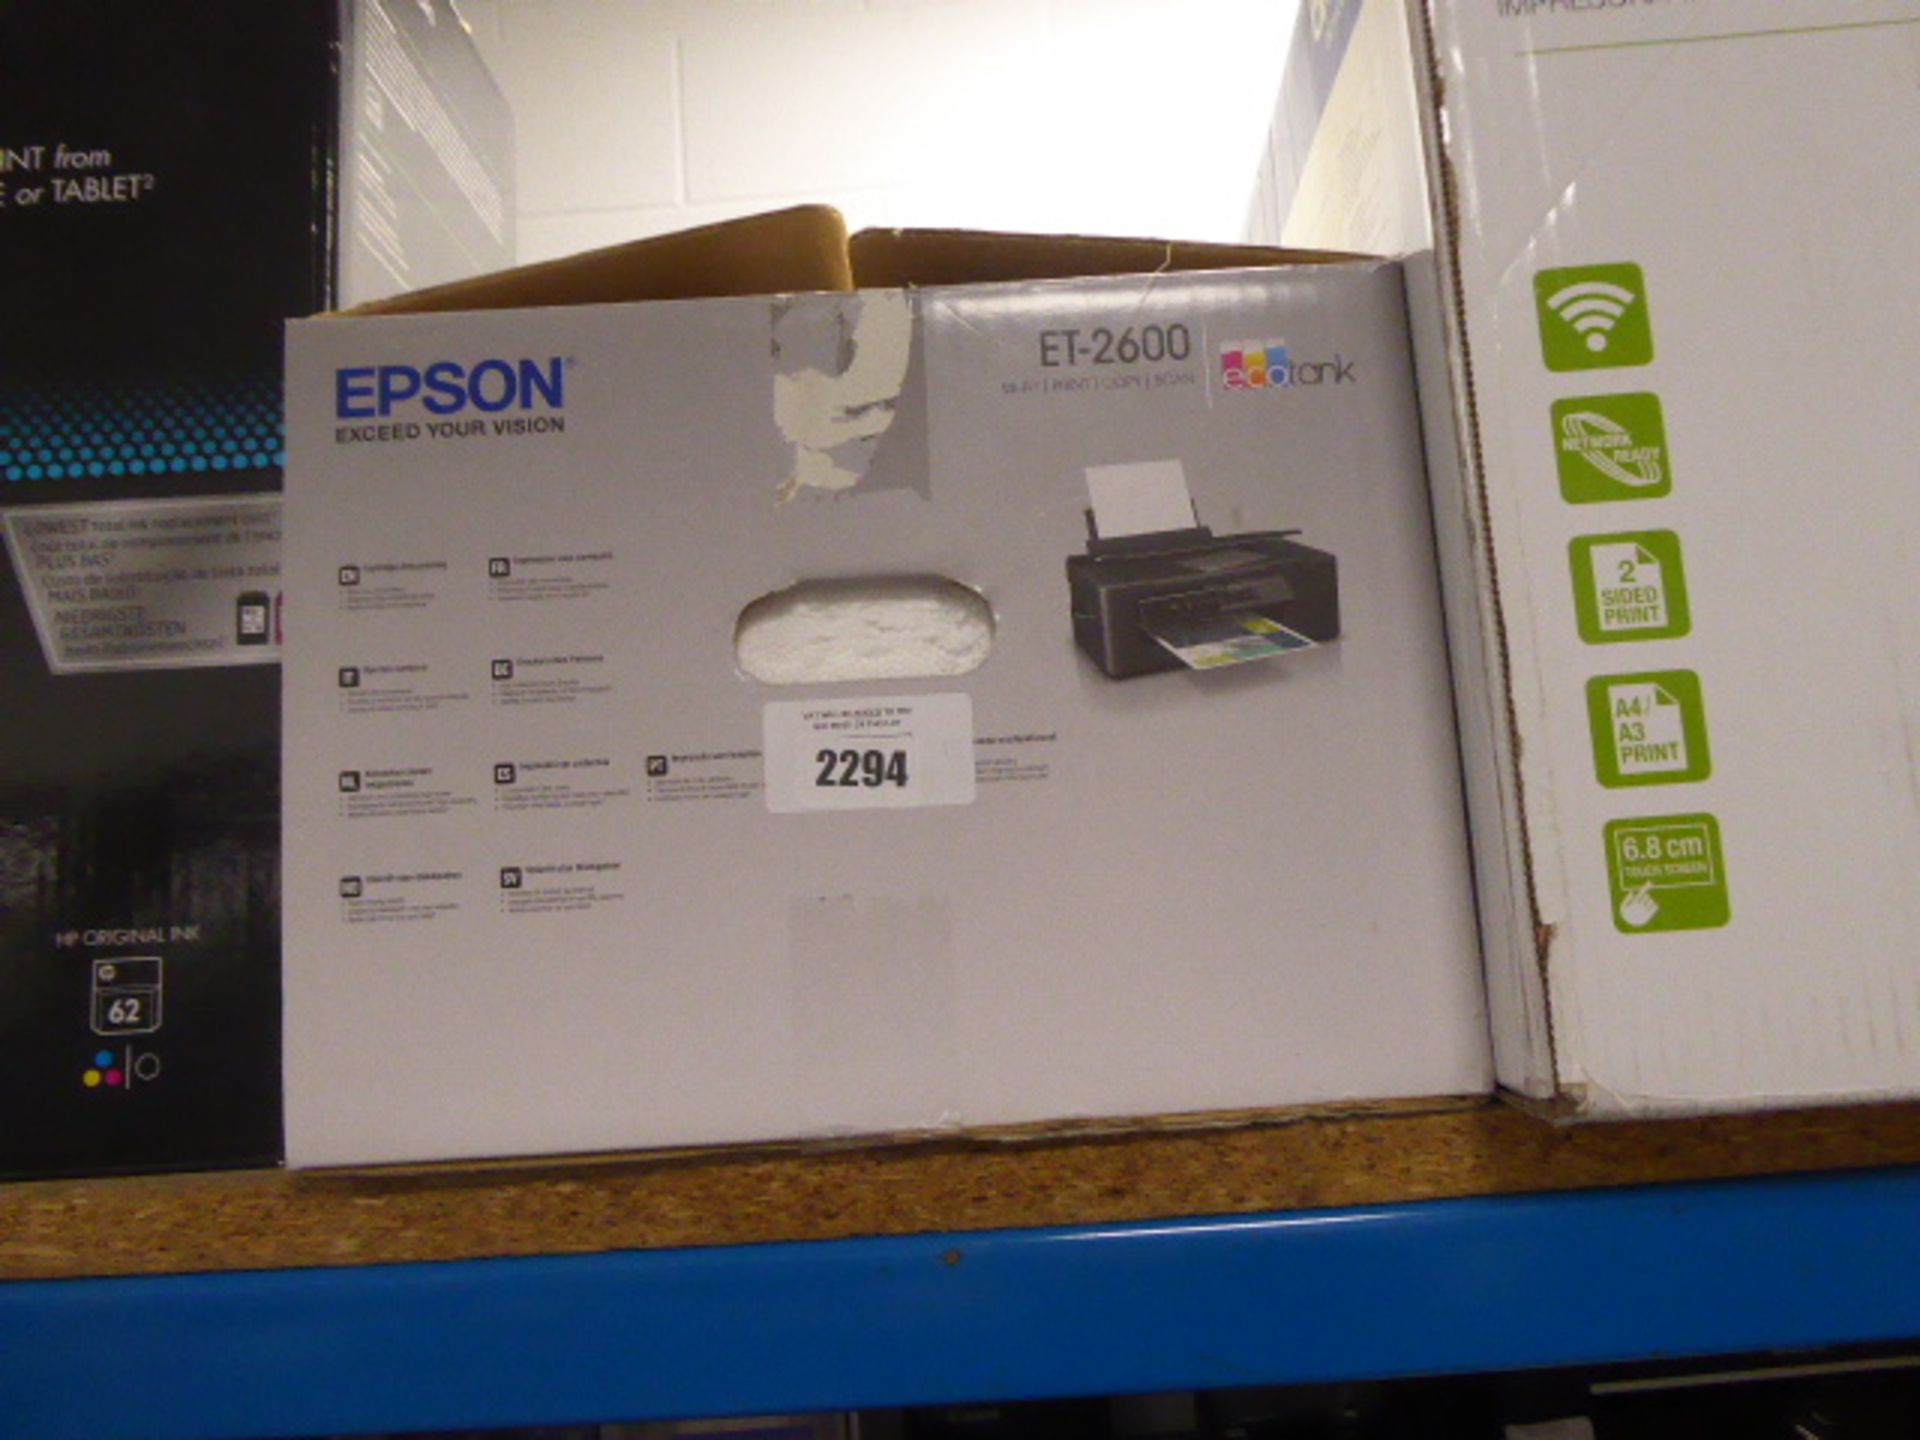 Epson ET2600 Ecotank printer in box